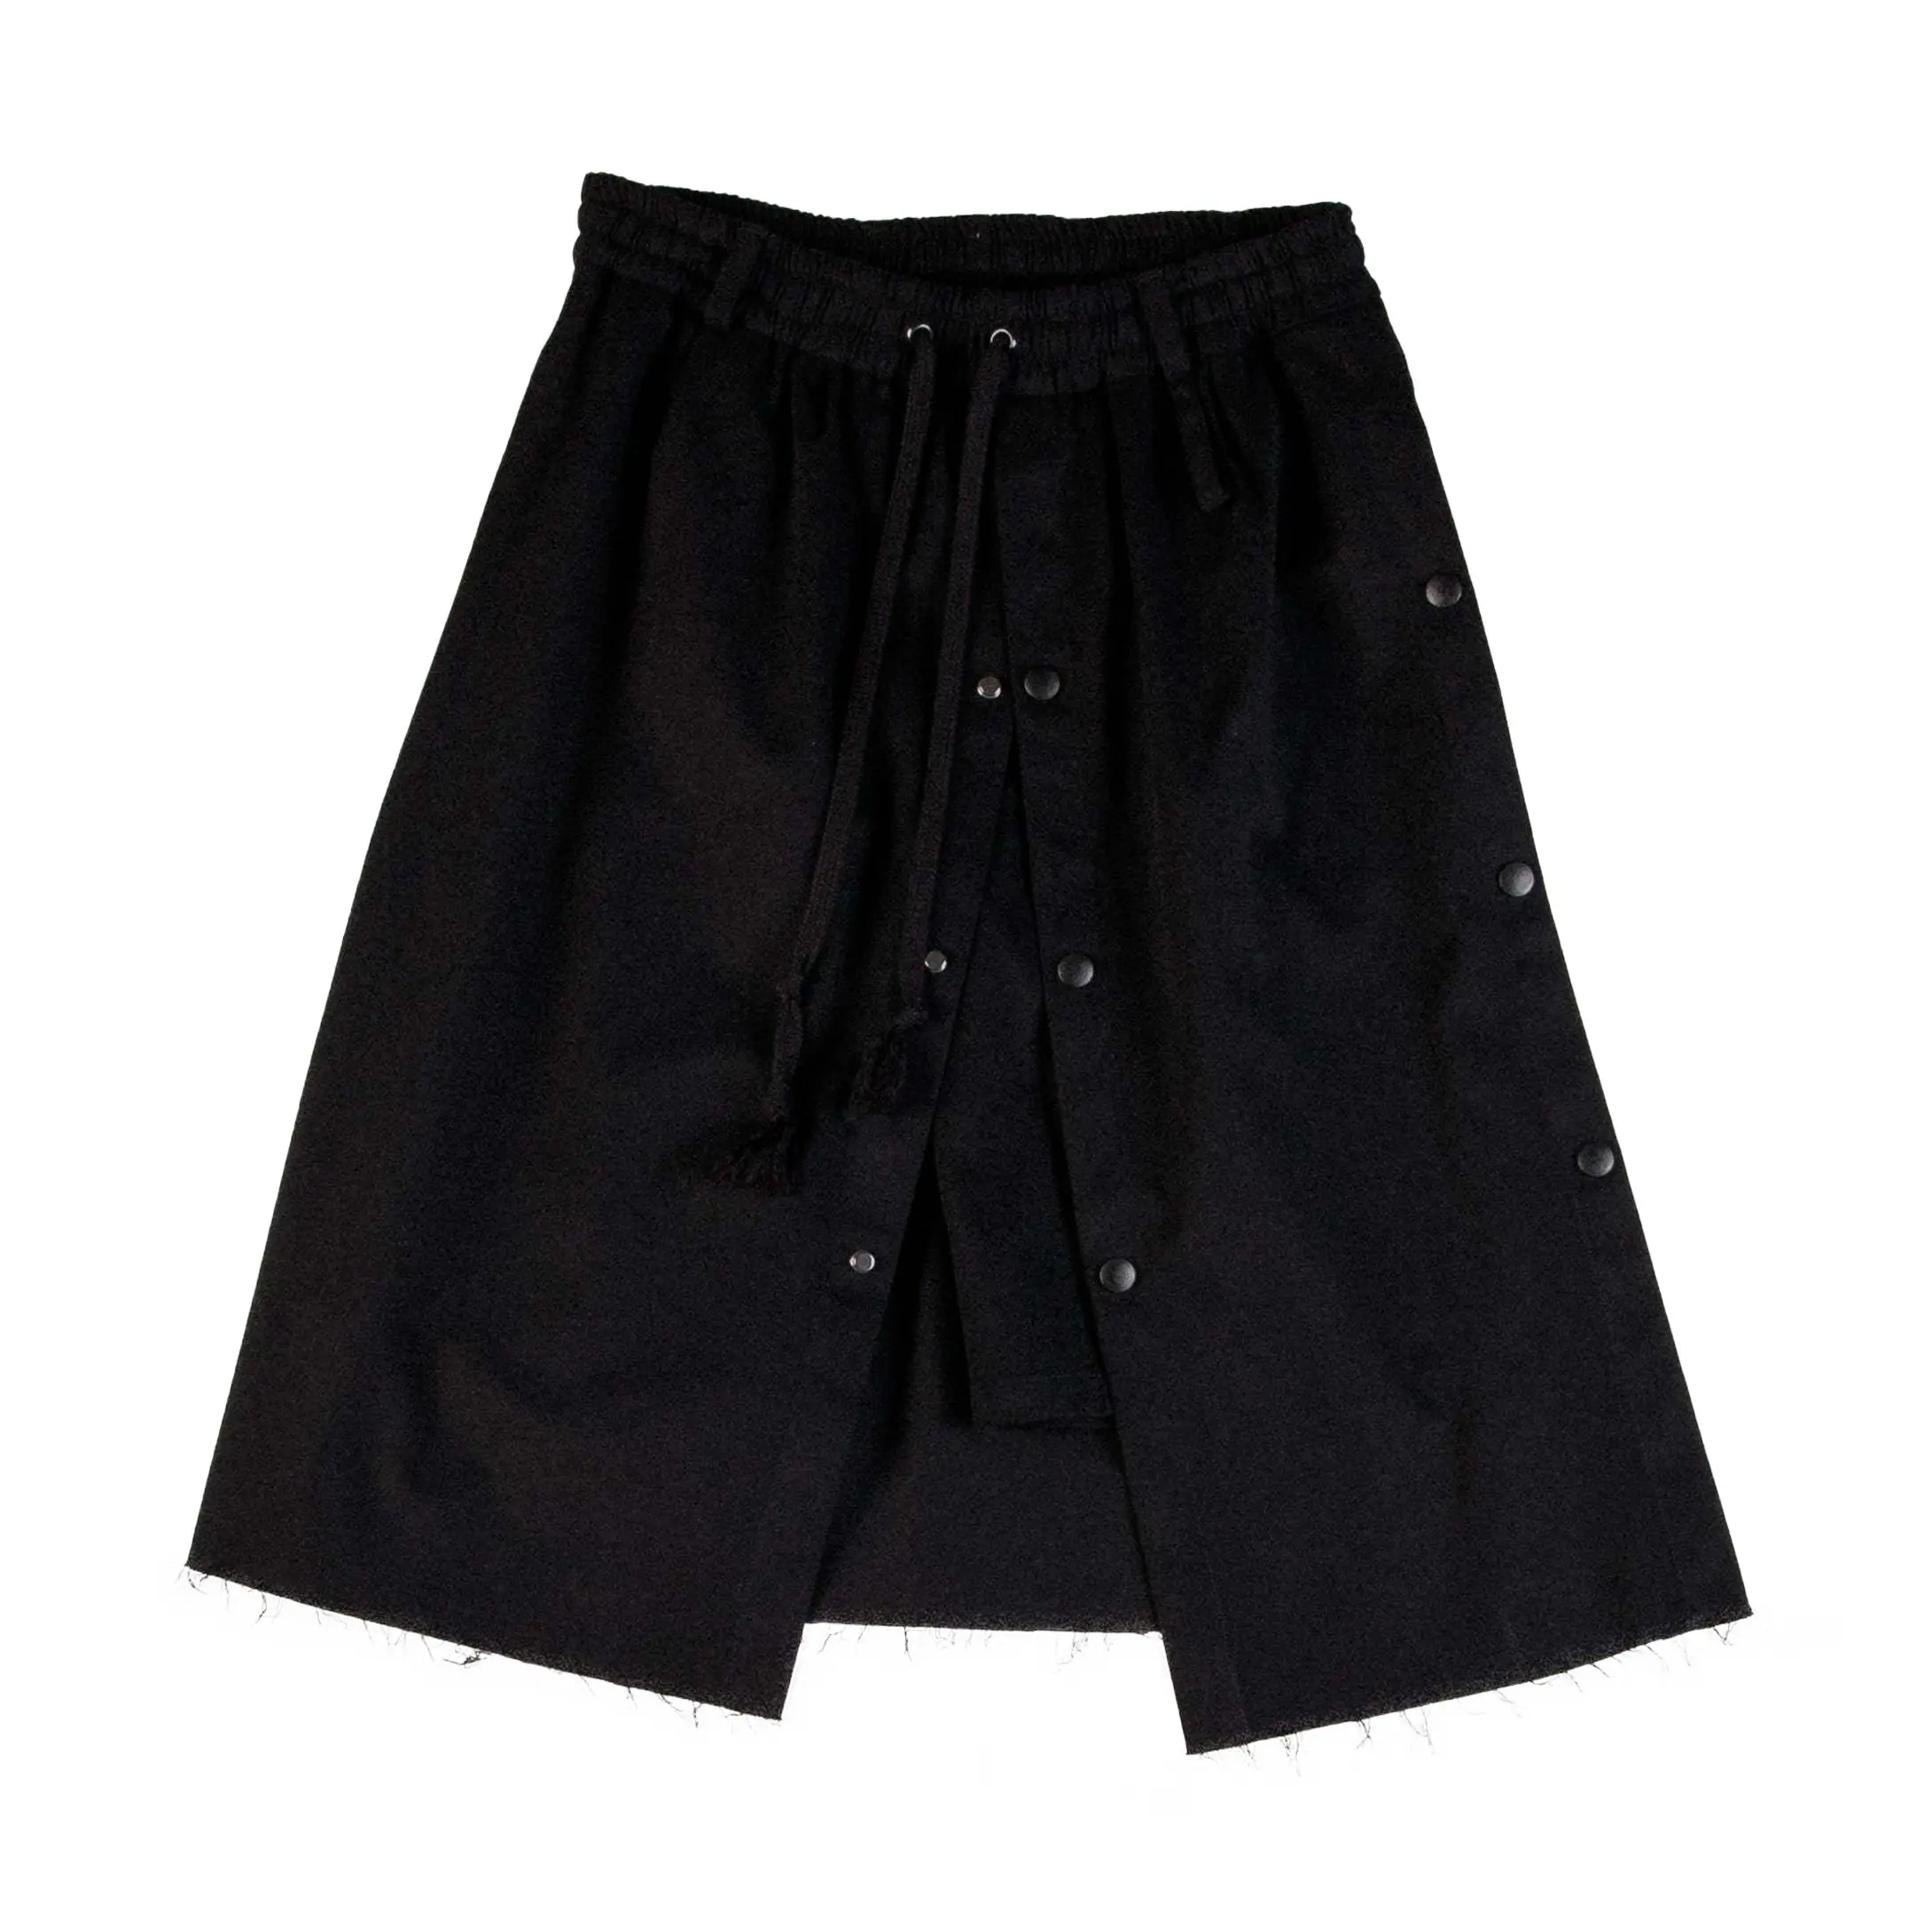 Wholesale custom solid color series of high quality irregular asymmetric raw edge black women's short skirt